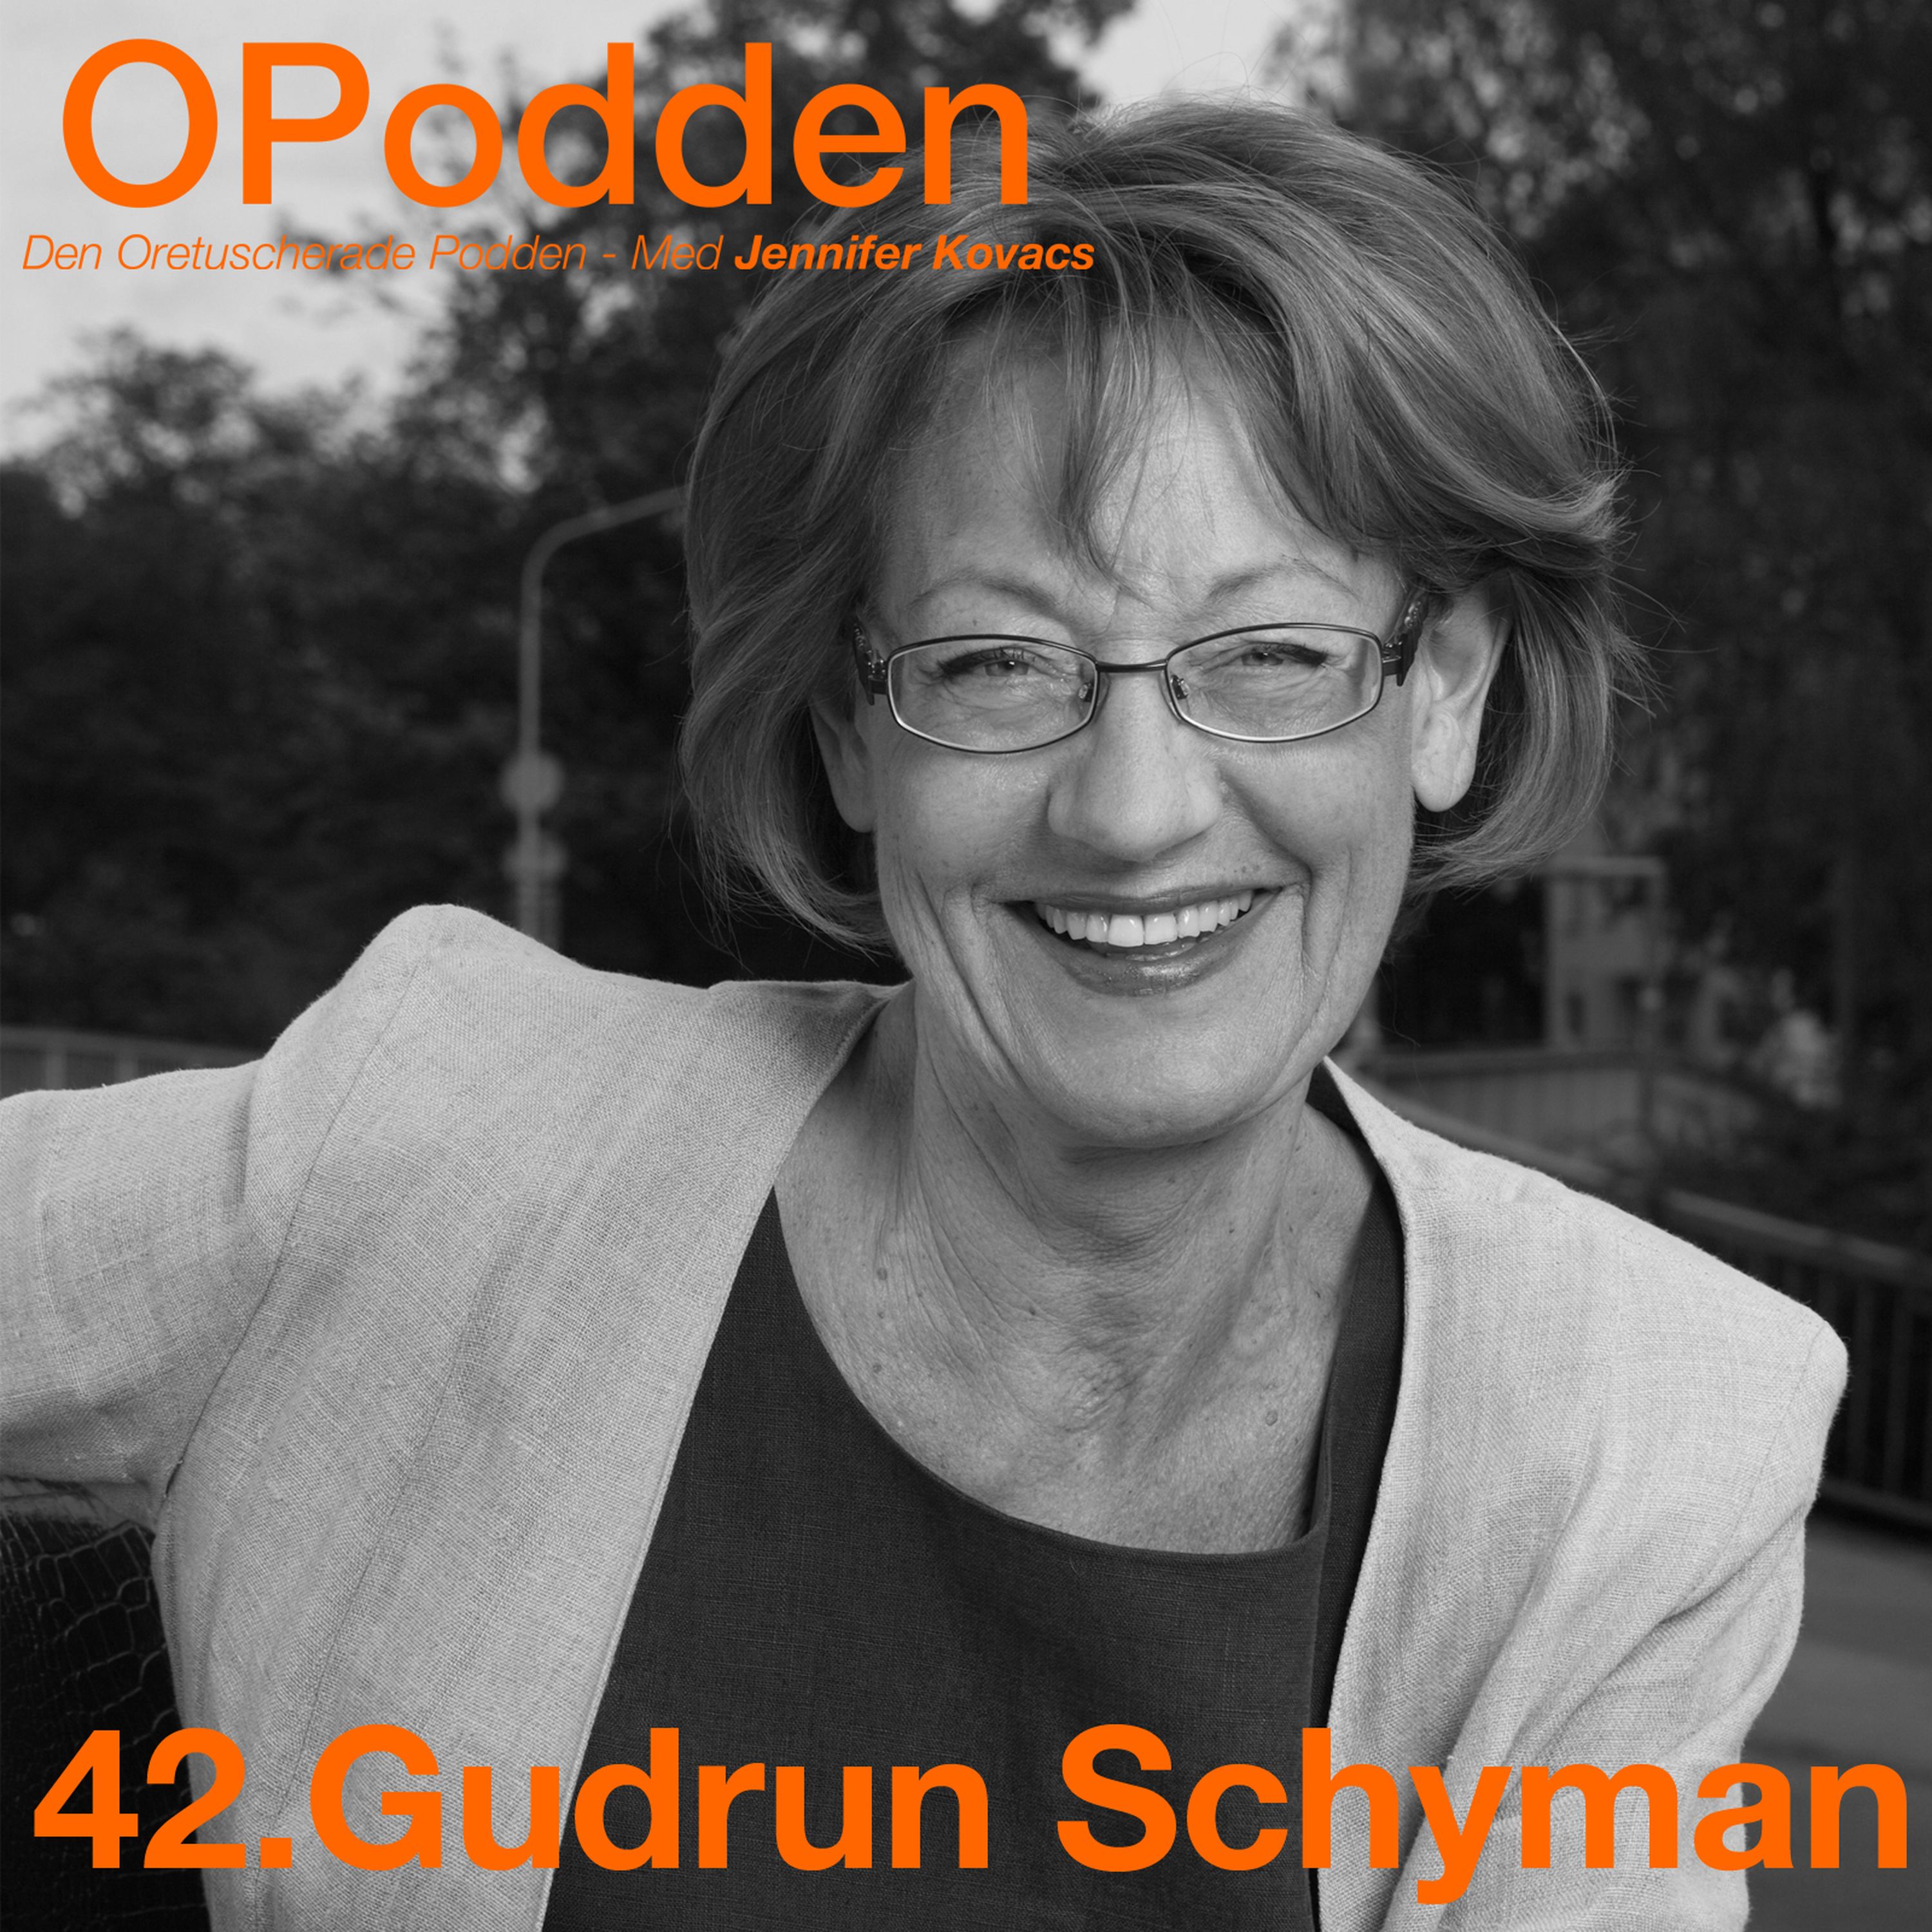 42.Gudrun Schyman